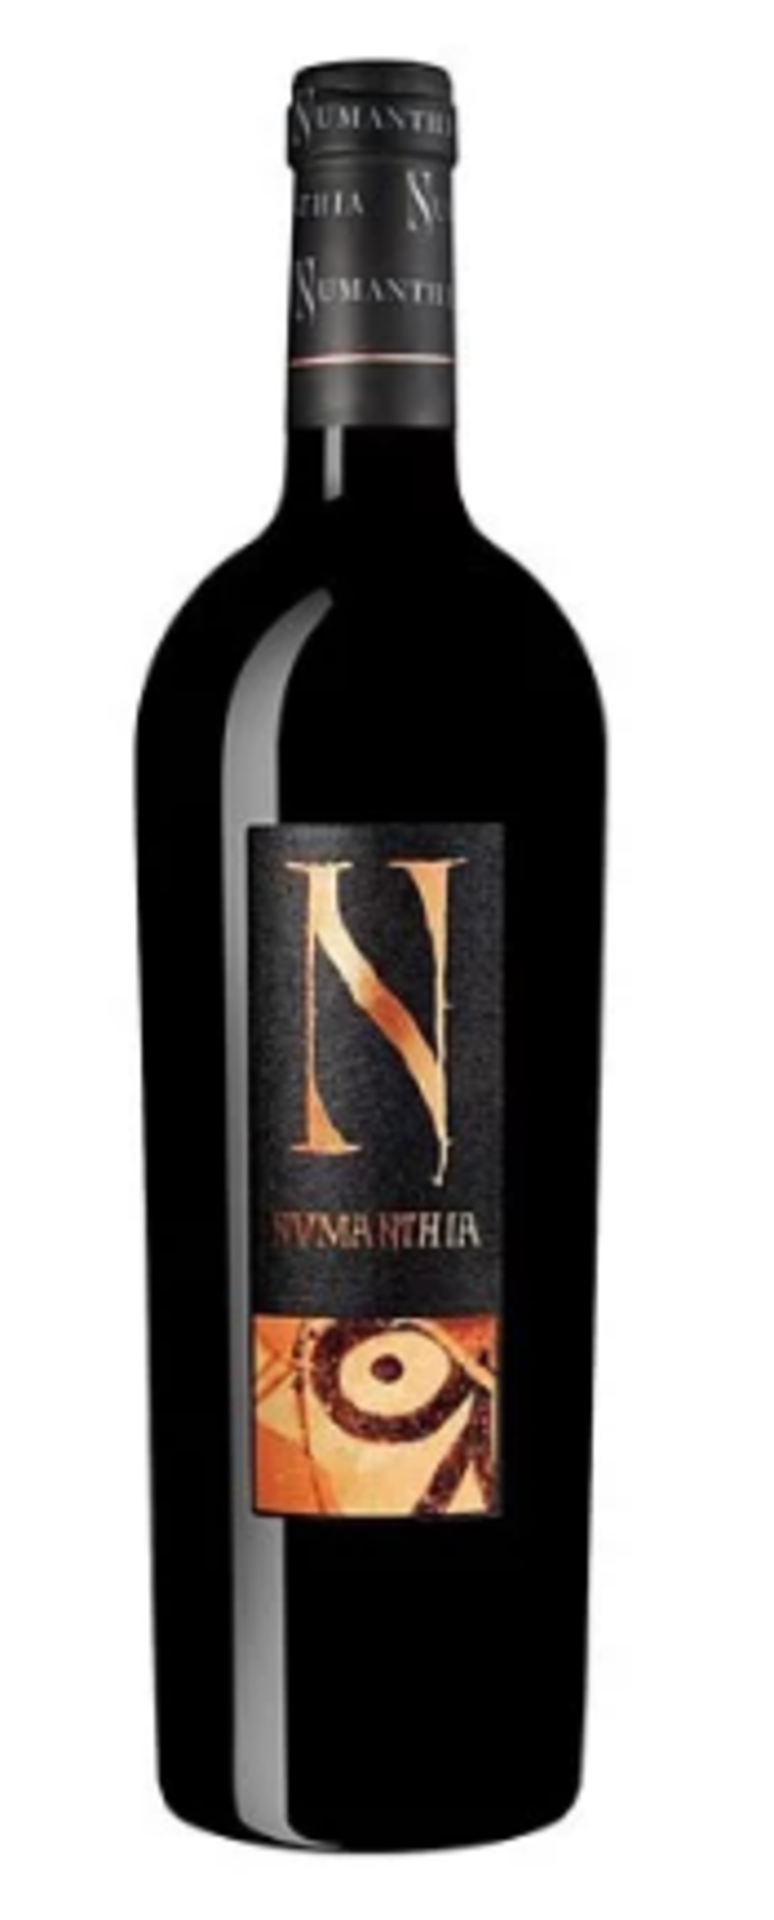 Numanthia Tempranilo Toro, Spain 2013 750ml ( Bid Is For 1x Bottle Option To Purchase More)